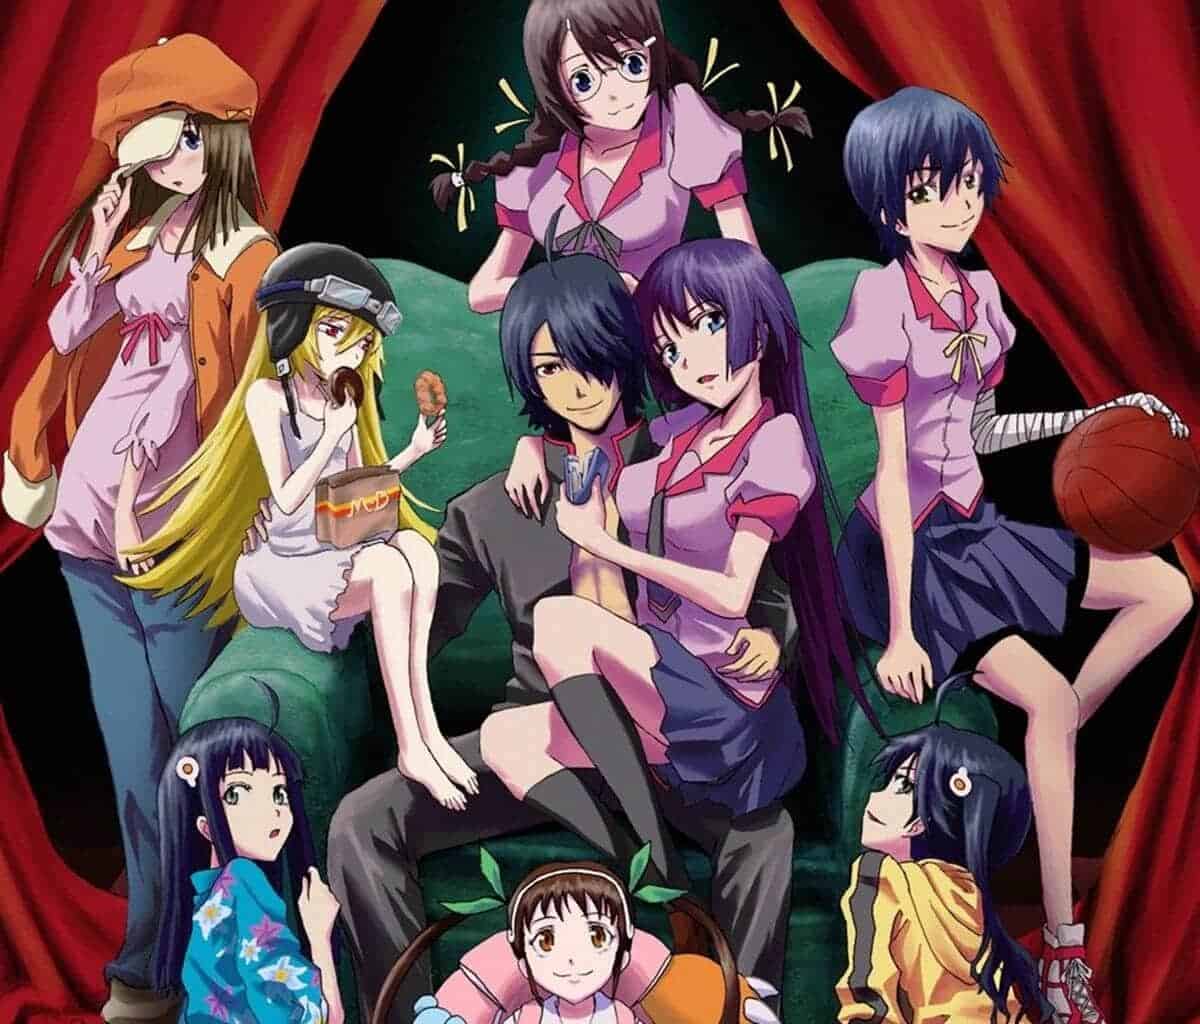 10 Anime To Watch If You Like The Monogatari Series